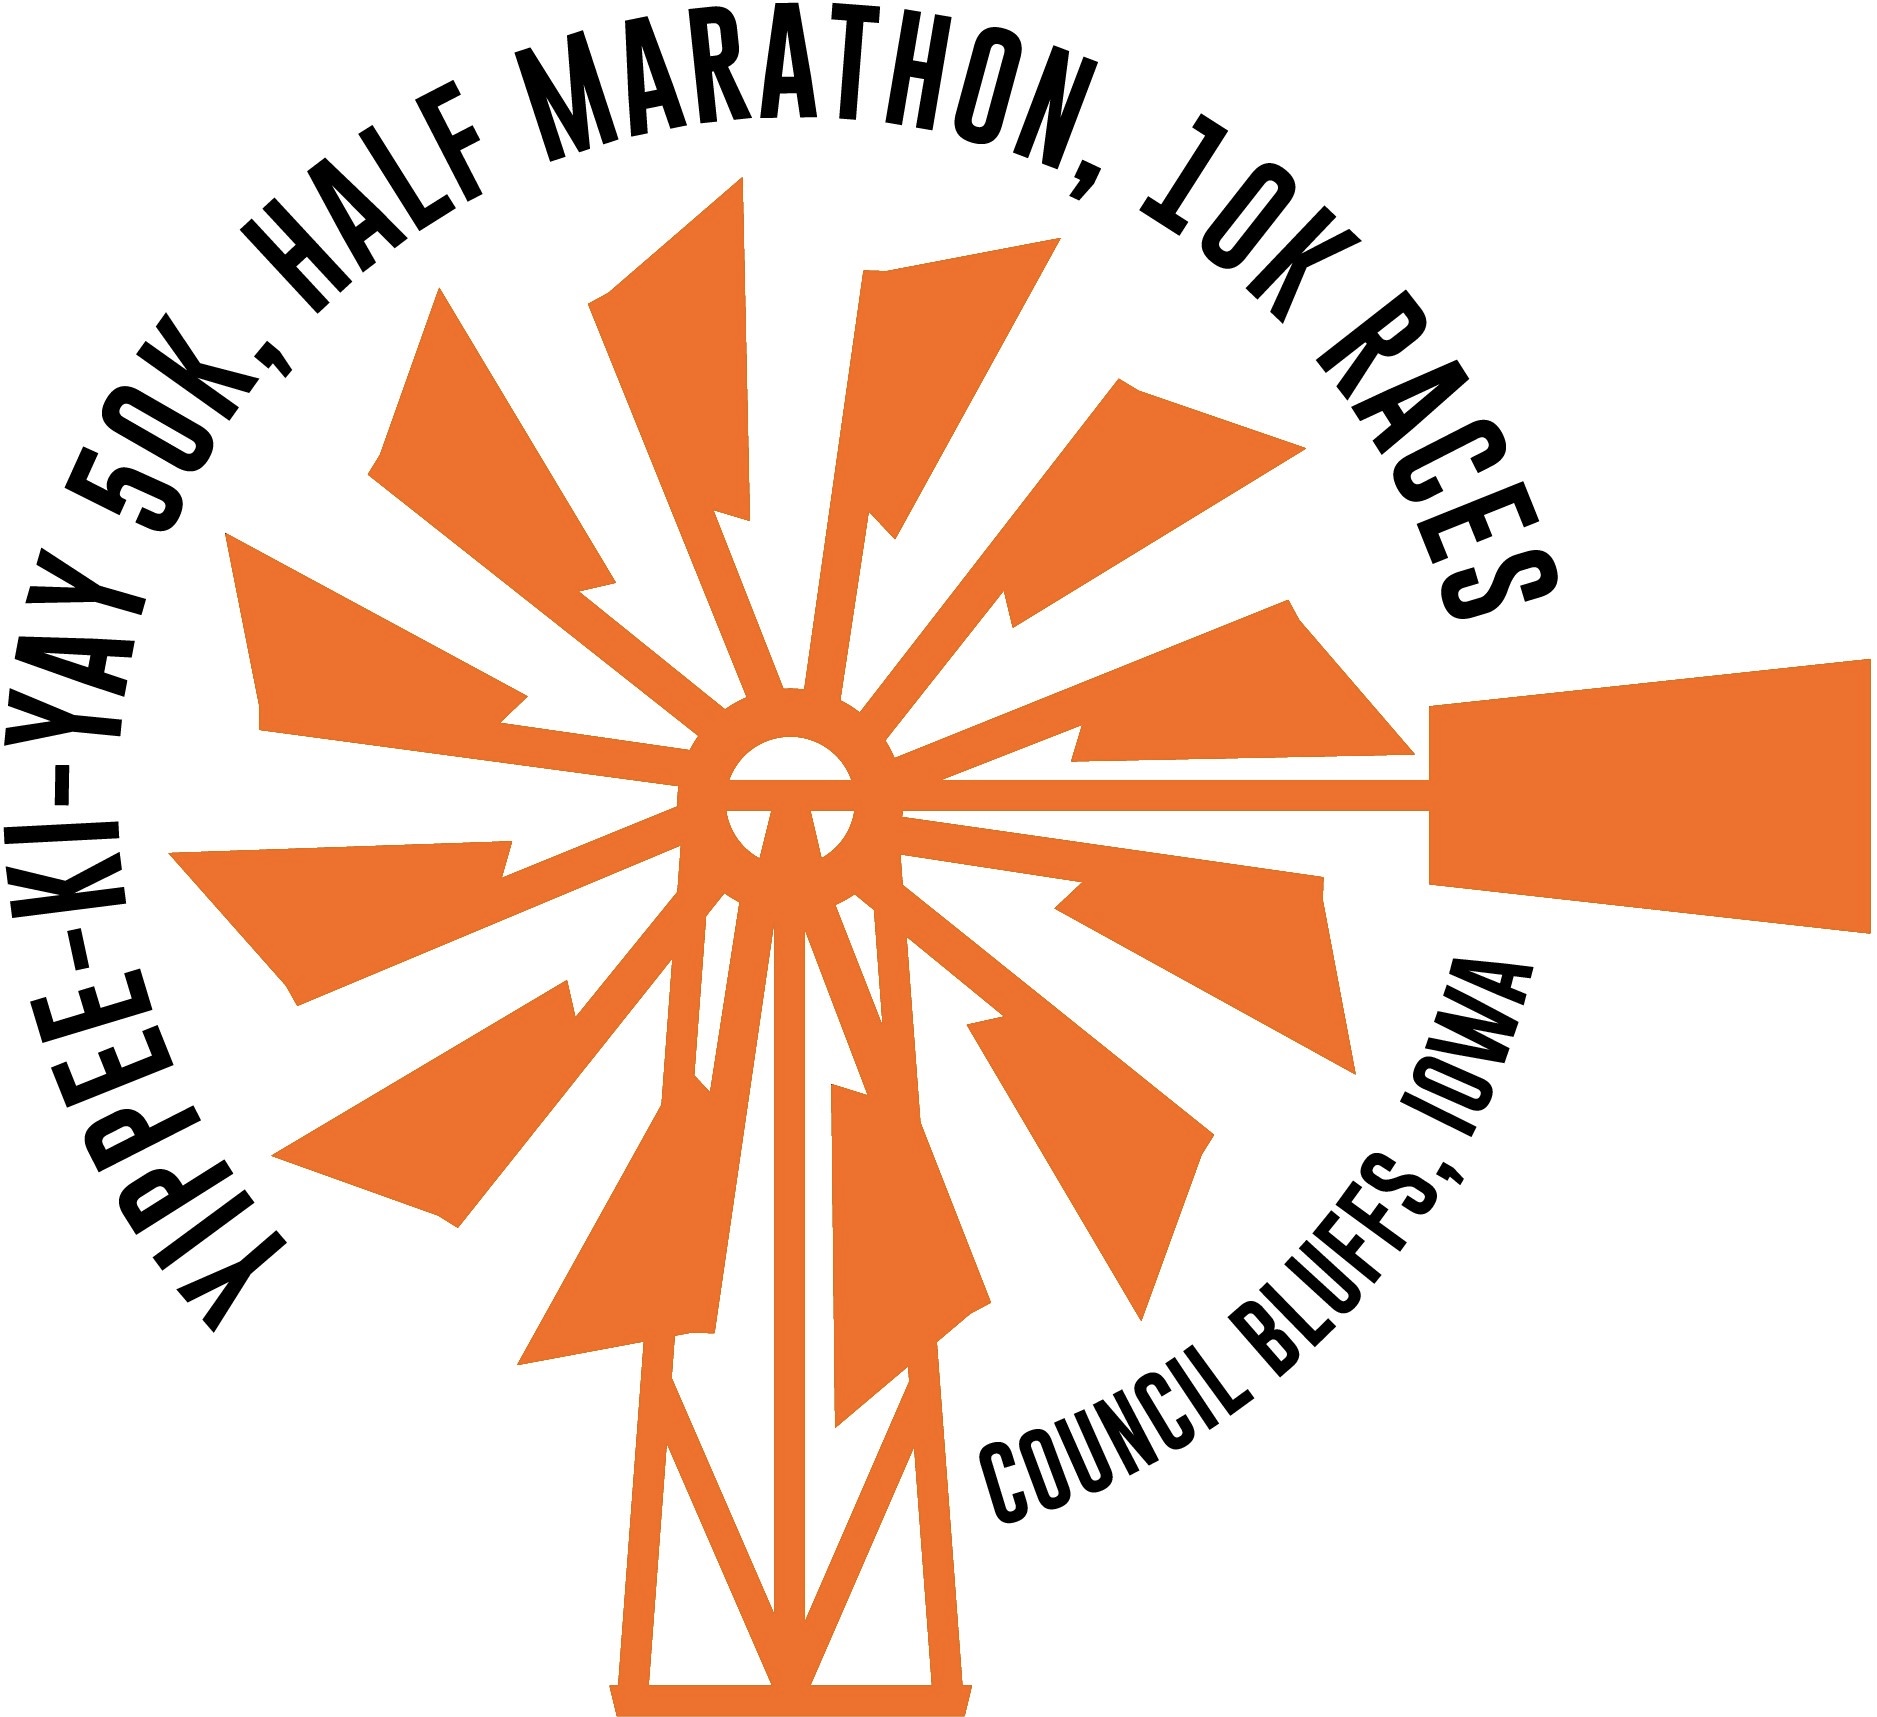 Yippee-Ki-Yay 50K, Half Marathon & 10K logo on RaceRaves